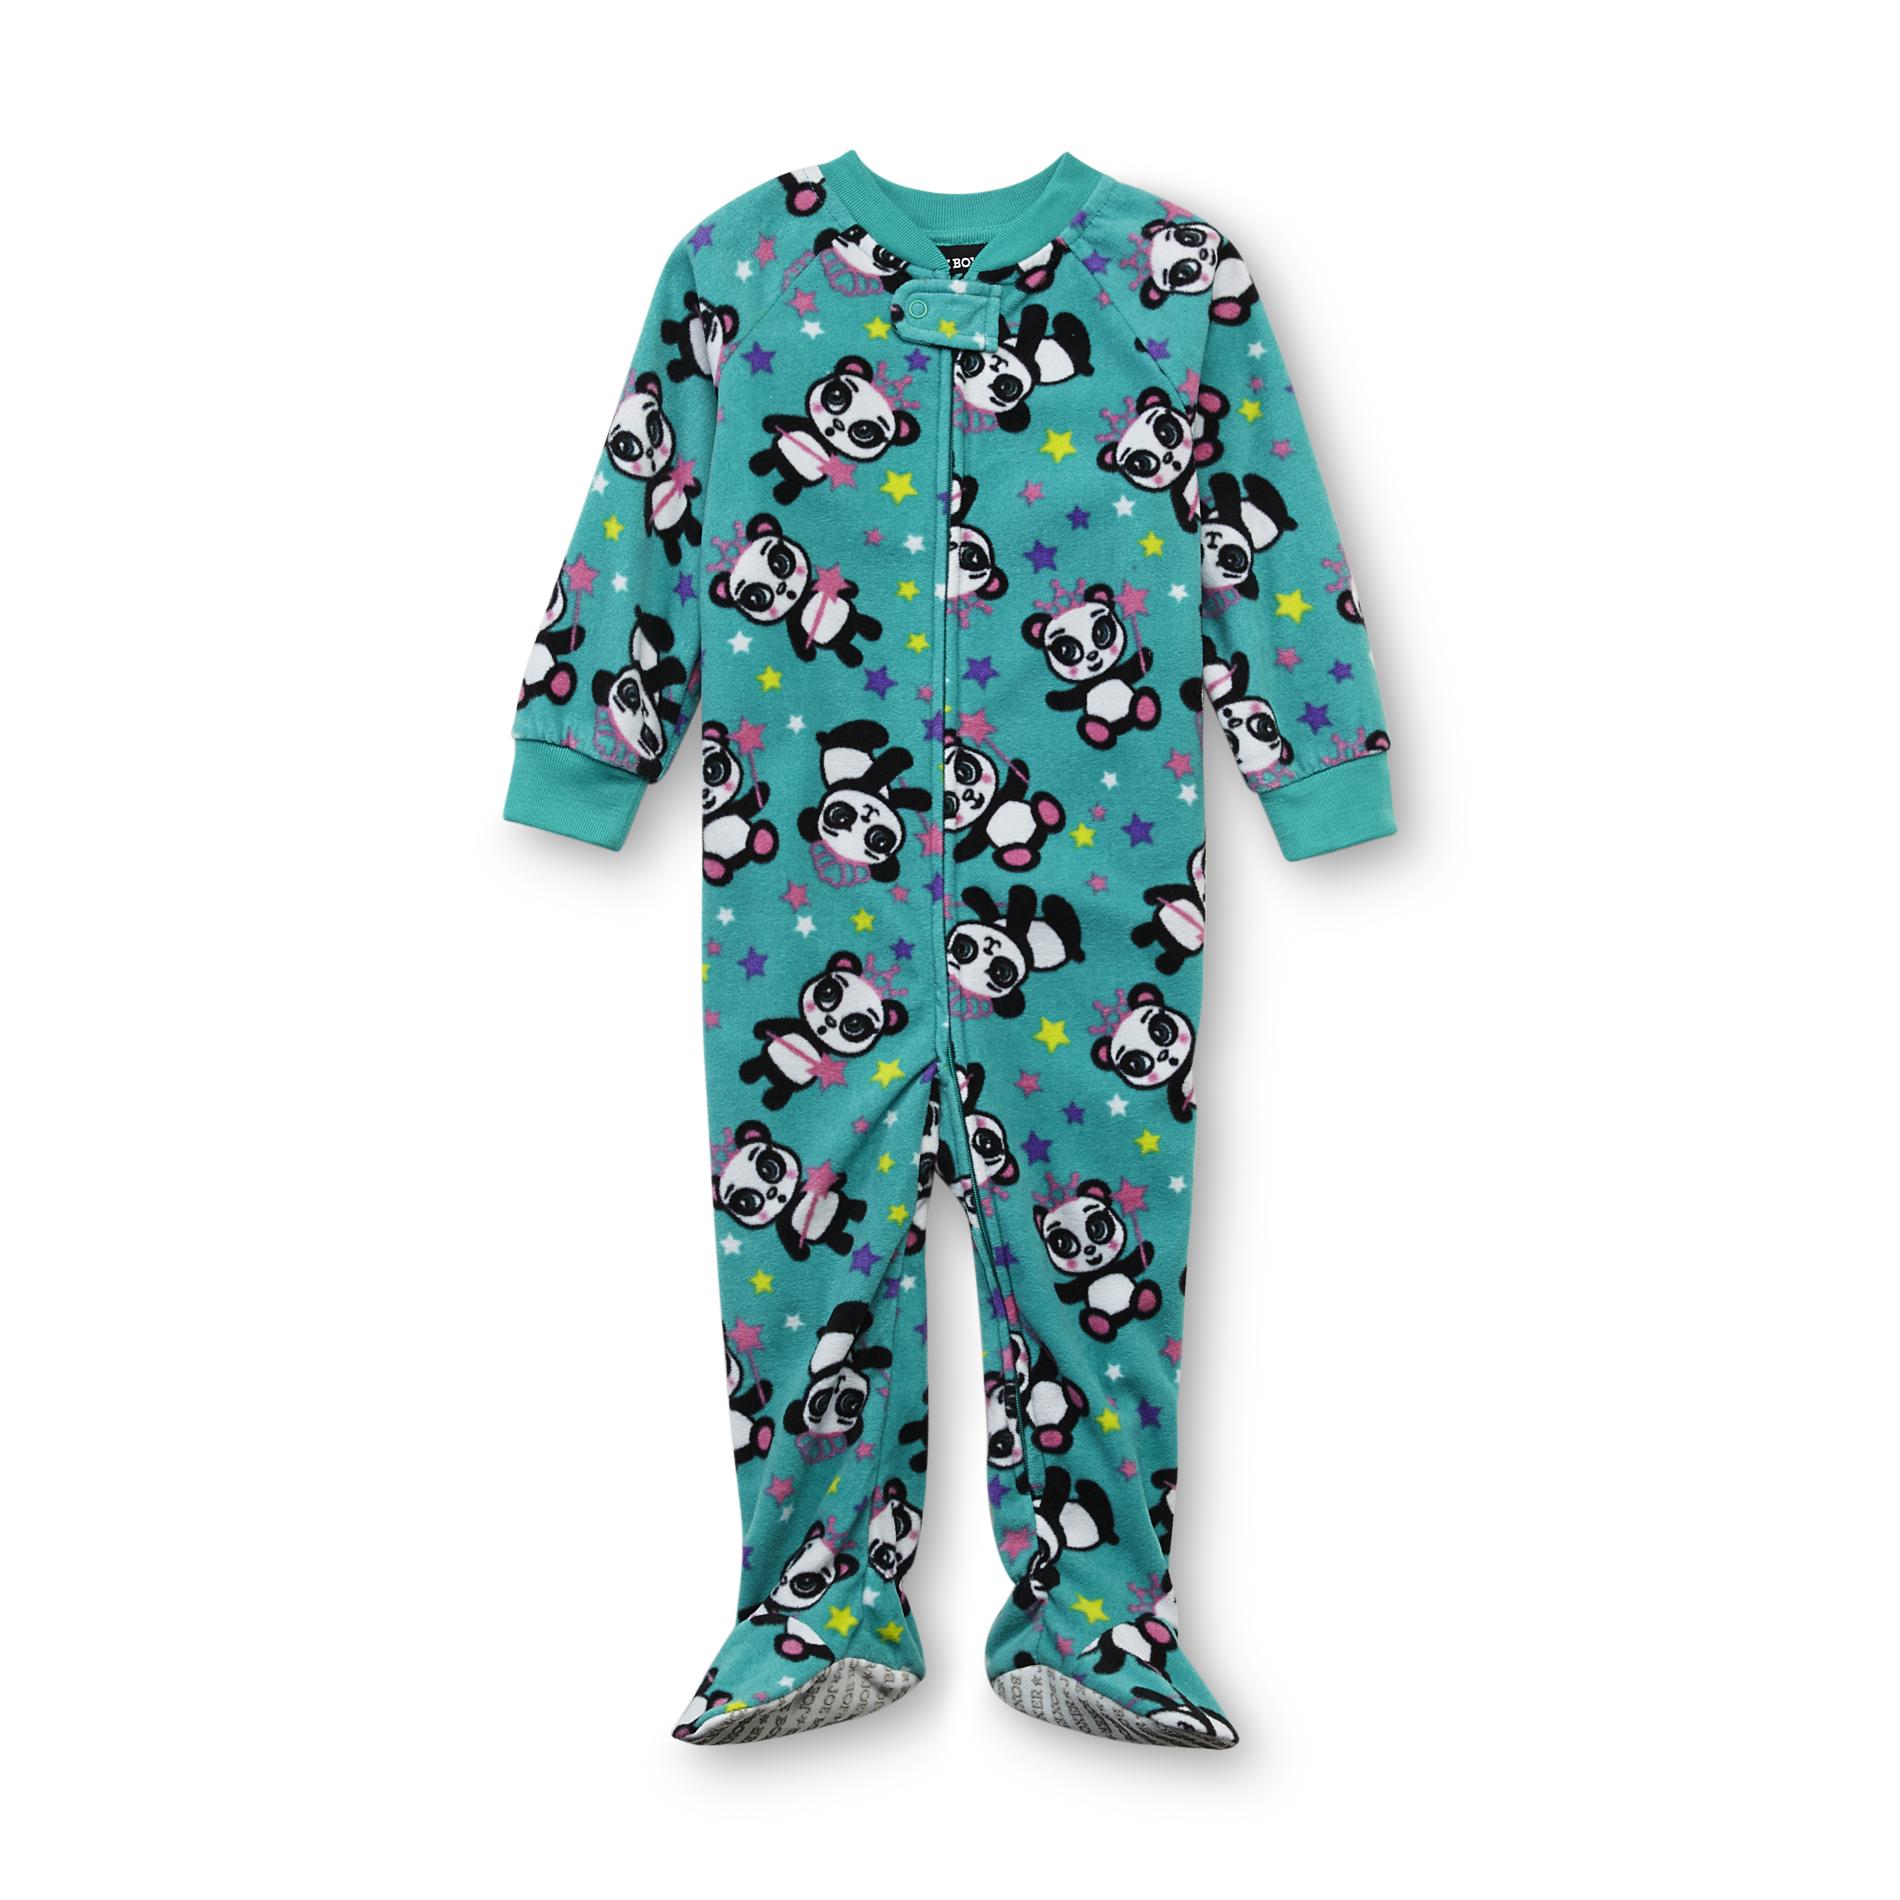 Joe Boxer Infant & Toddler Girl's Fleece Footed Sleeper Pajamas - Panda